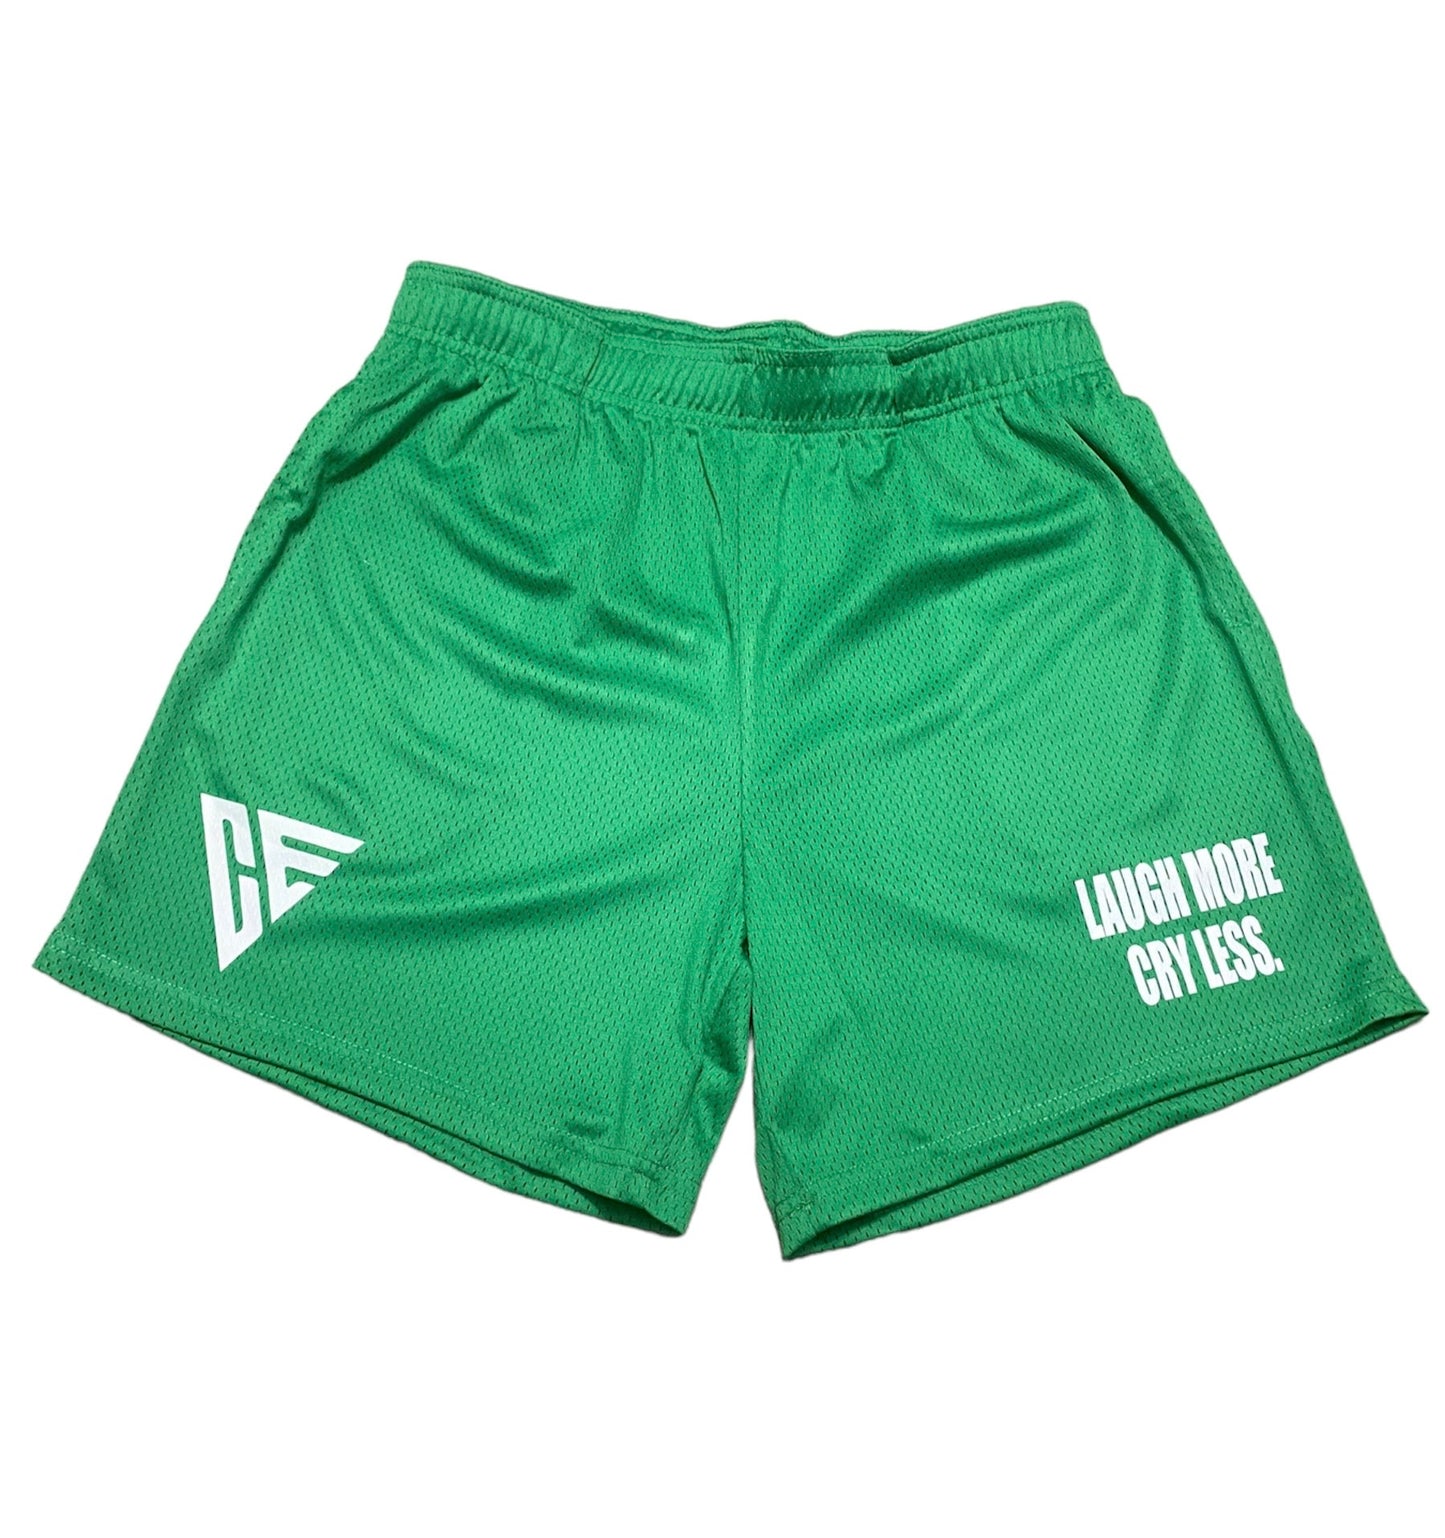 Circa Green Mesh Shorts